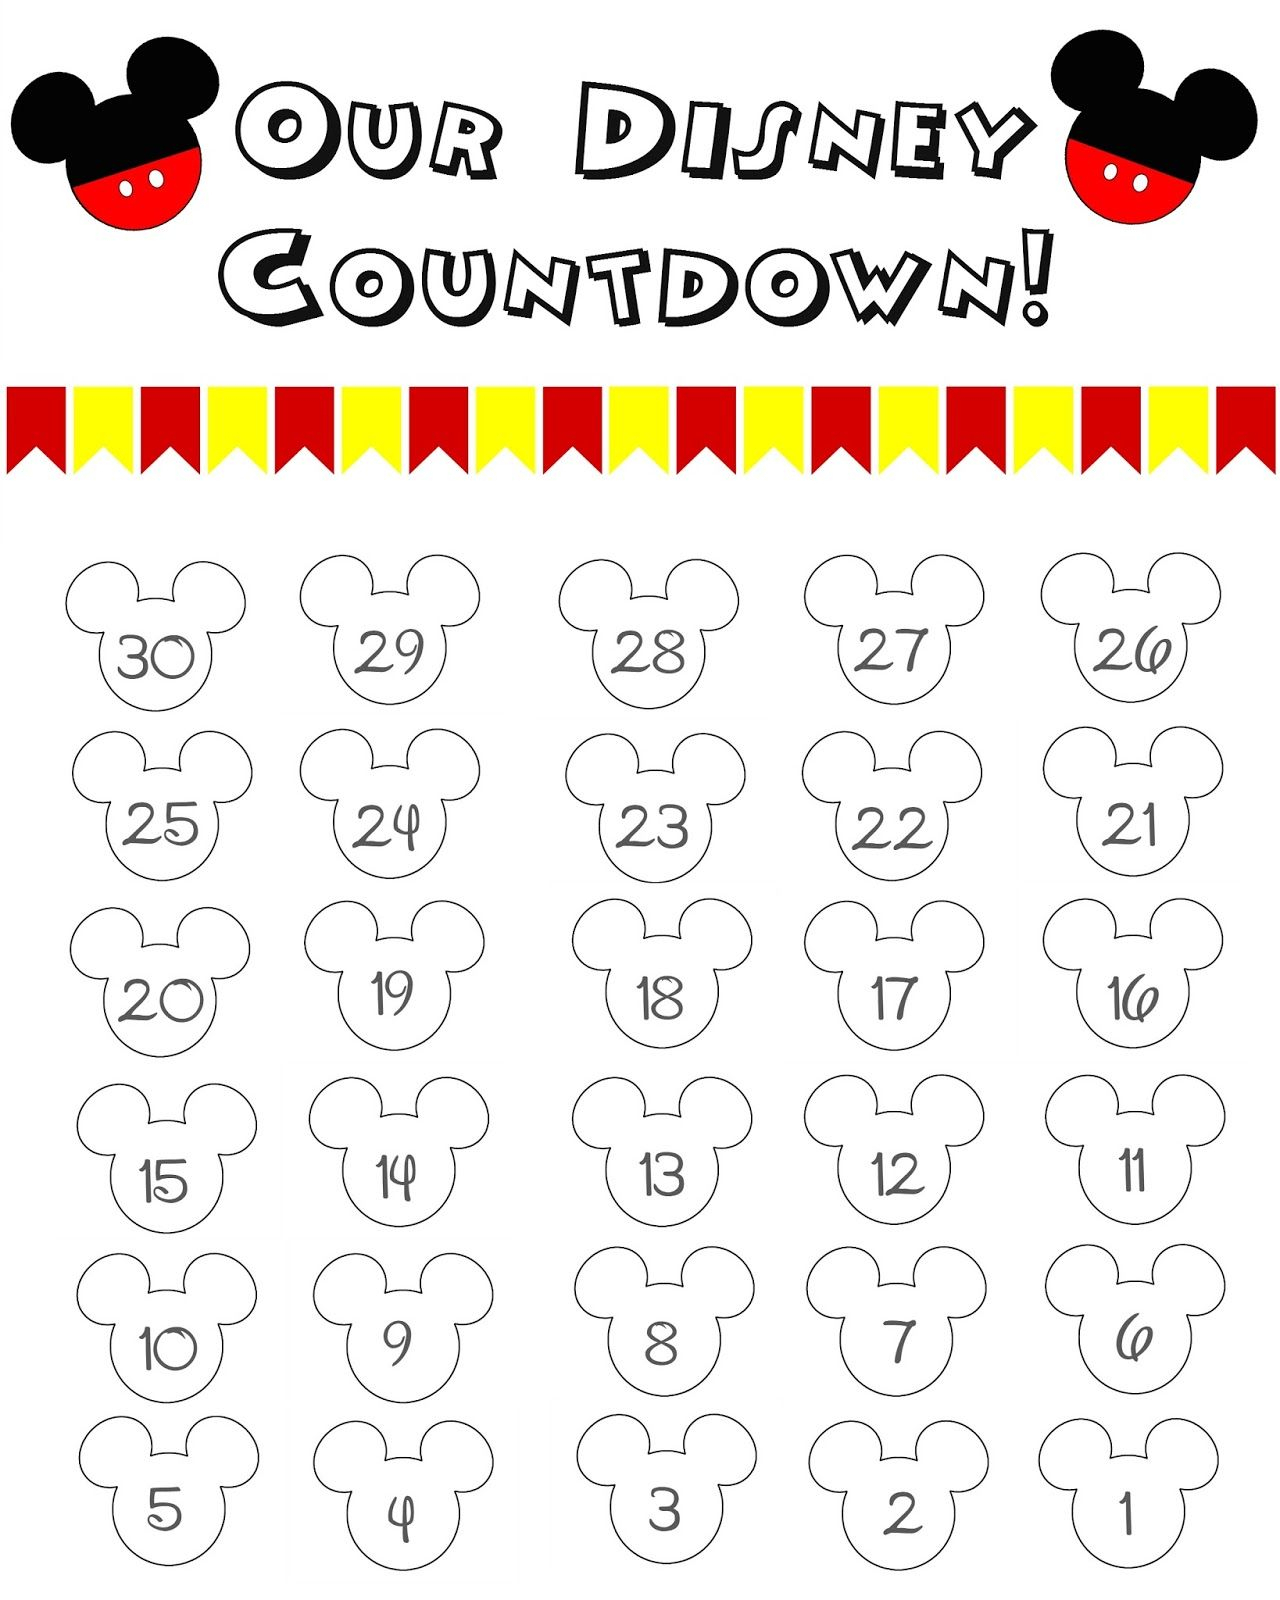 Disney World Countdown Calendar  Free Printable!! | Disney for Disney Countdown Calendar App